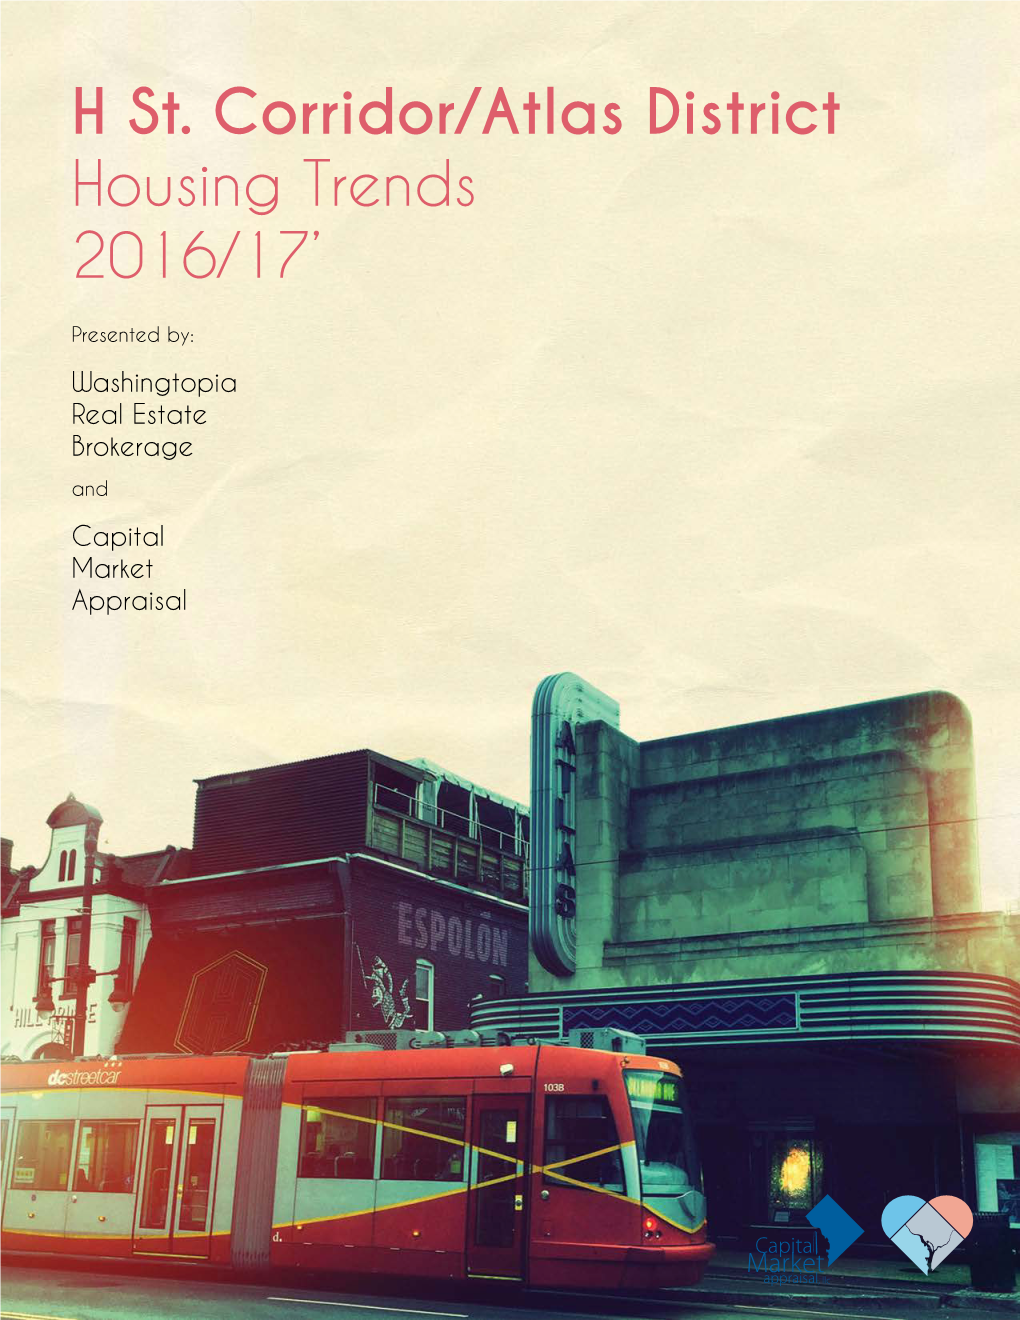 H St Corridor/Atlas District Housing Trends 2016/17